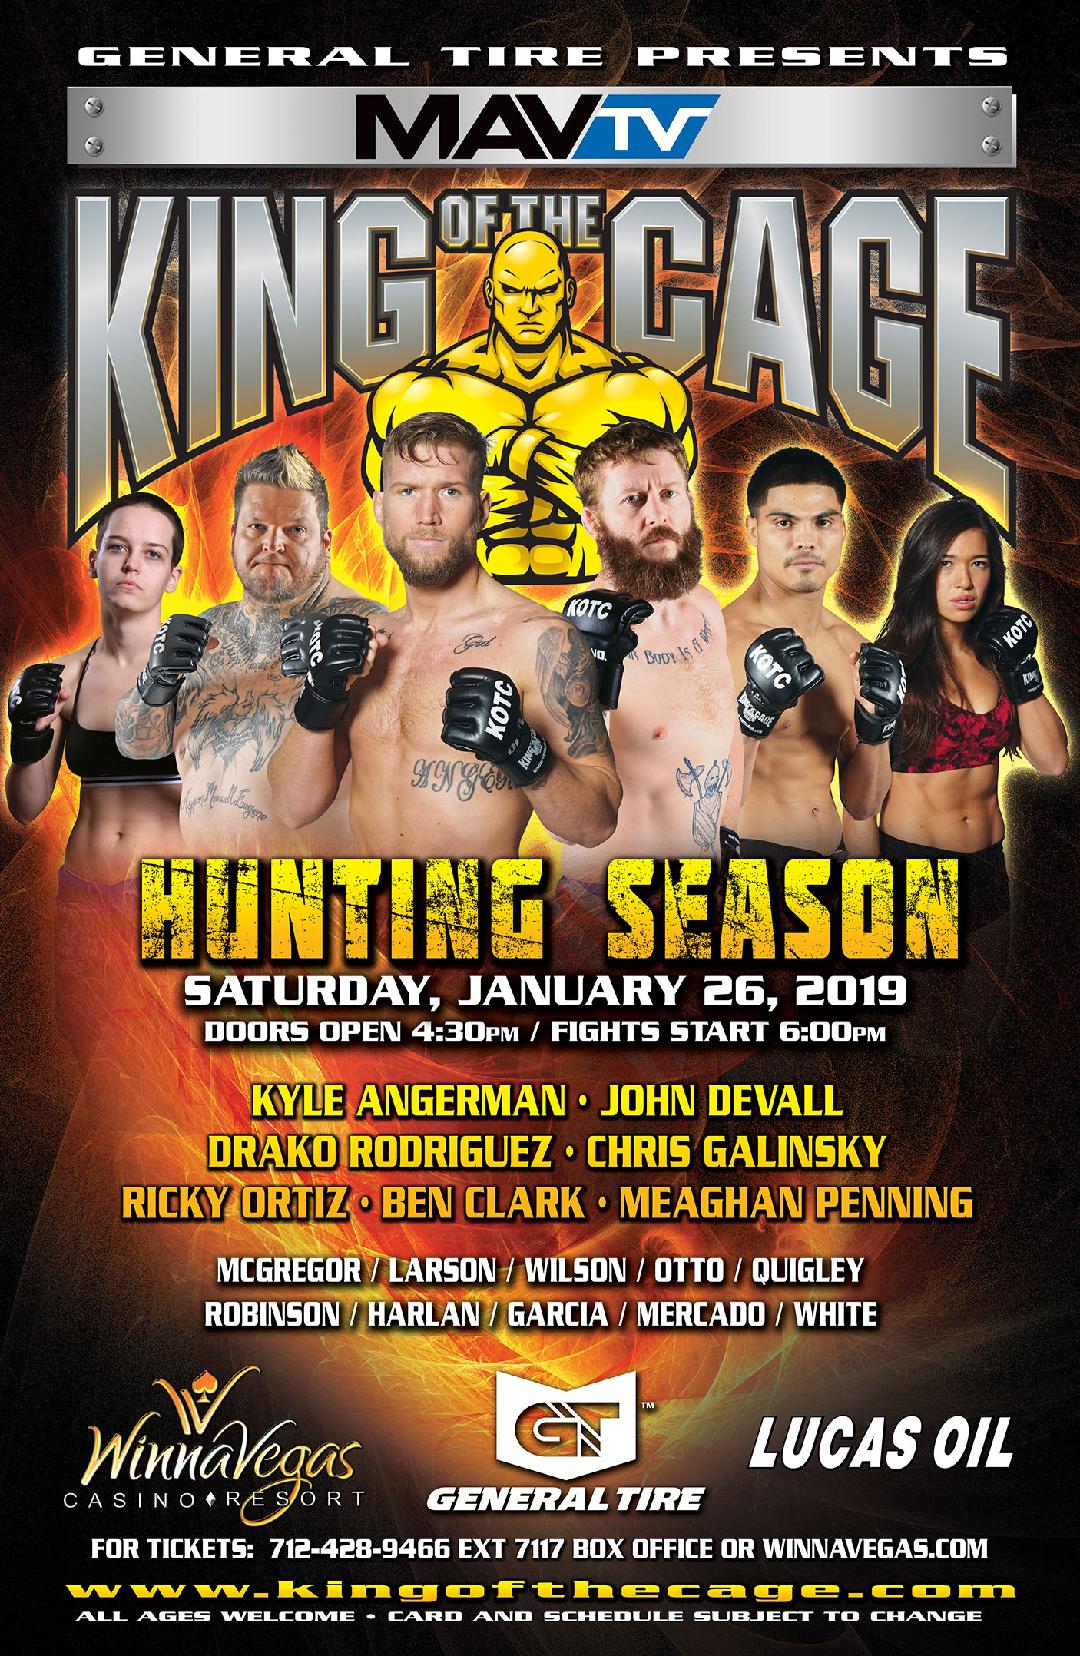 King of the Cage Returns to WinnaVegas Casino Resort on January 26 for “HUNTING SEASON”